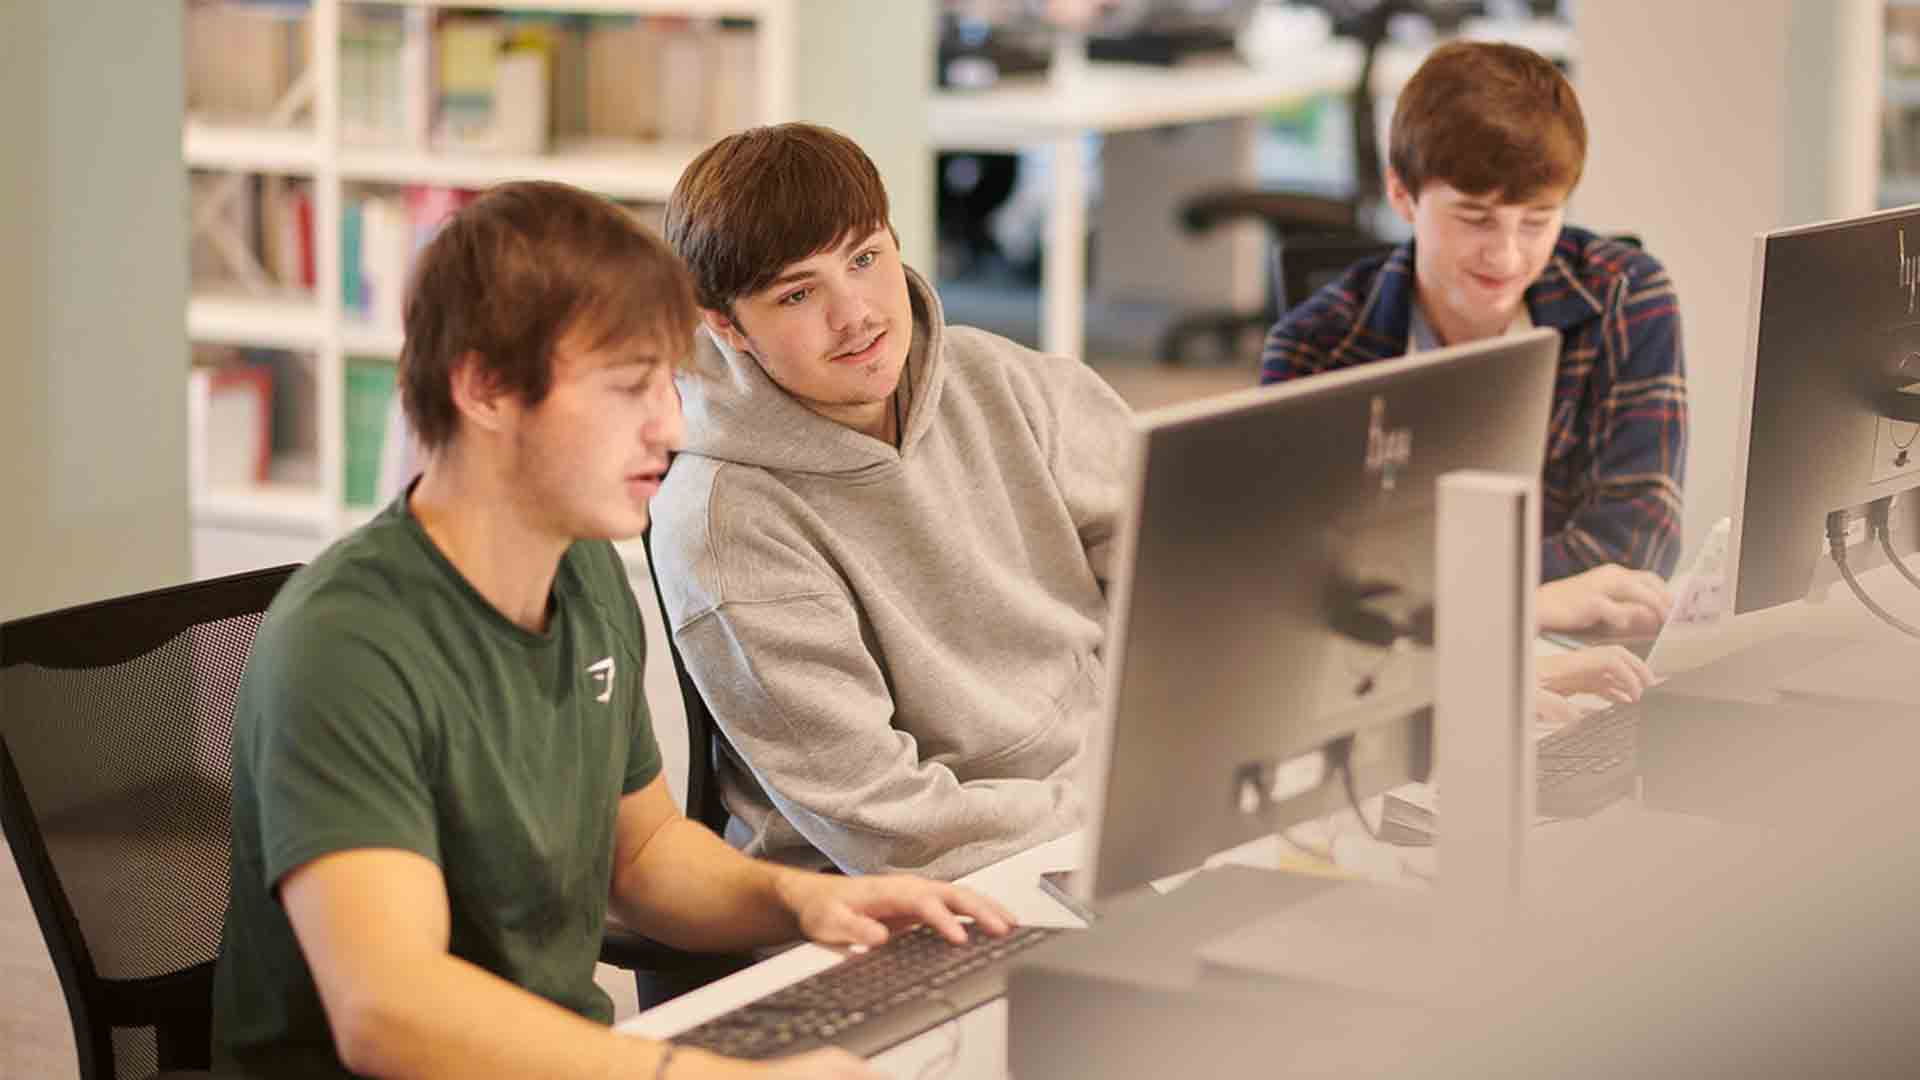 Students sharing PC screen